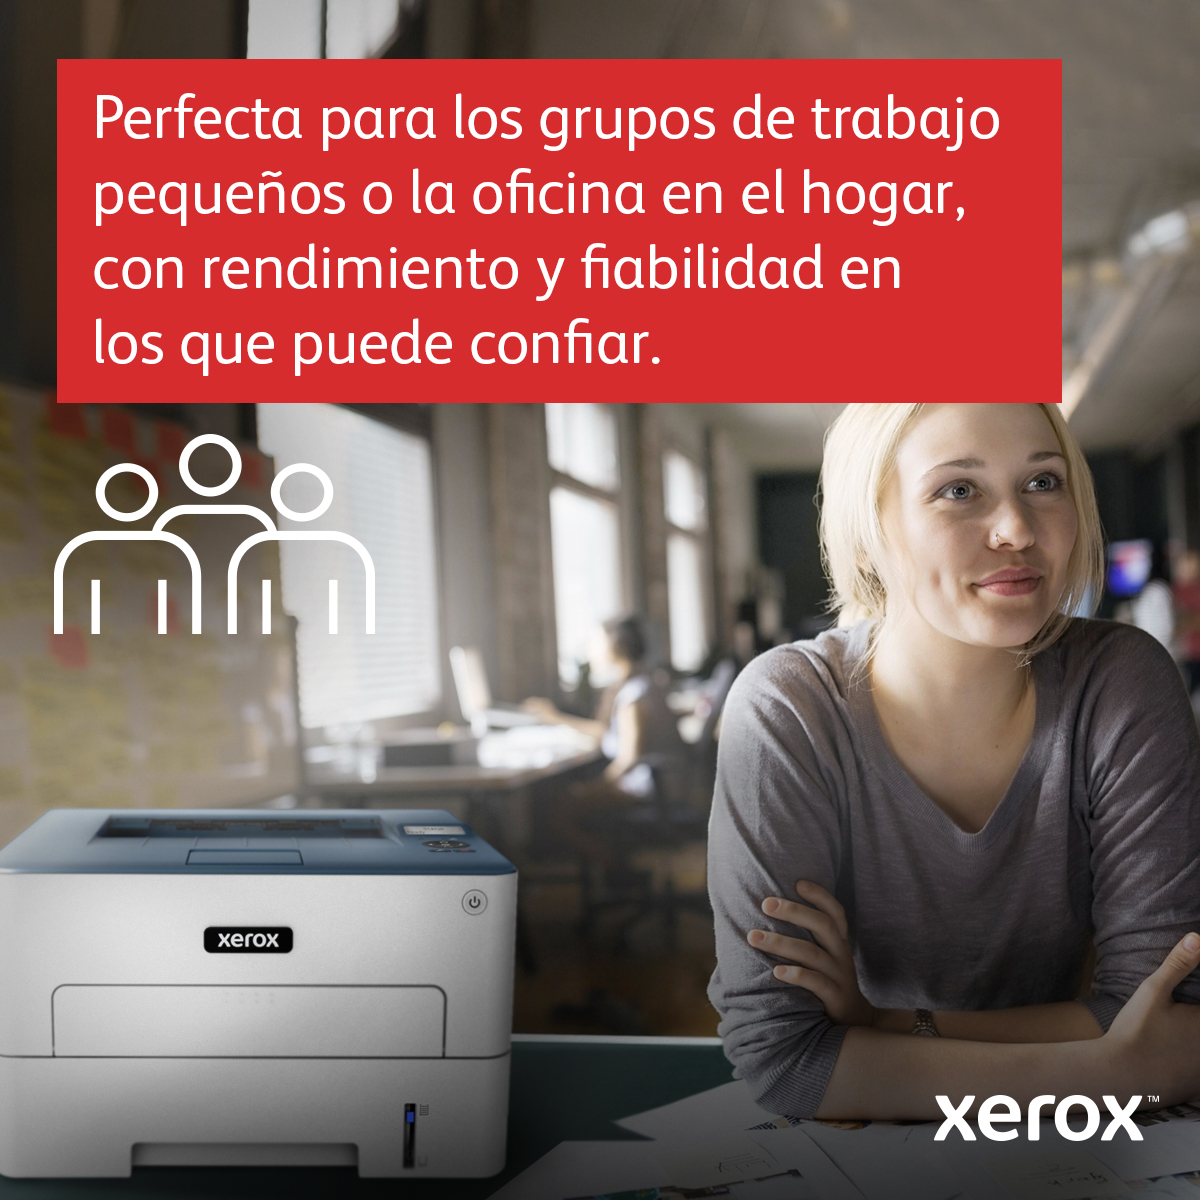 A XEROX 948713 Multifunktionsdrucker Netzwerkfähig Laser